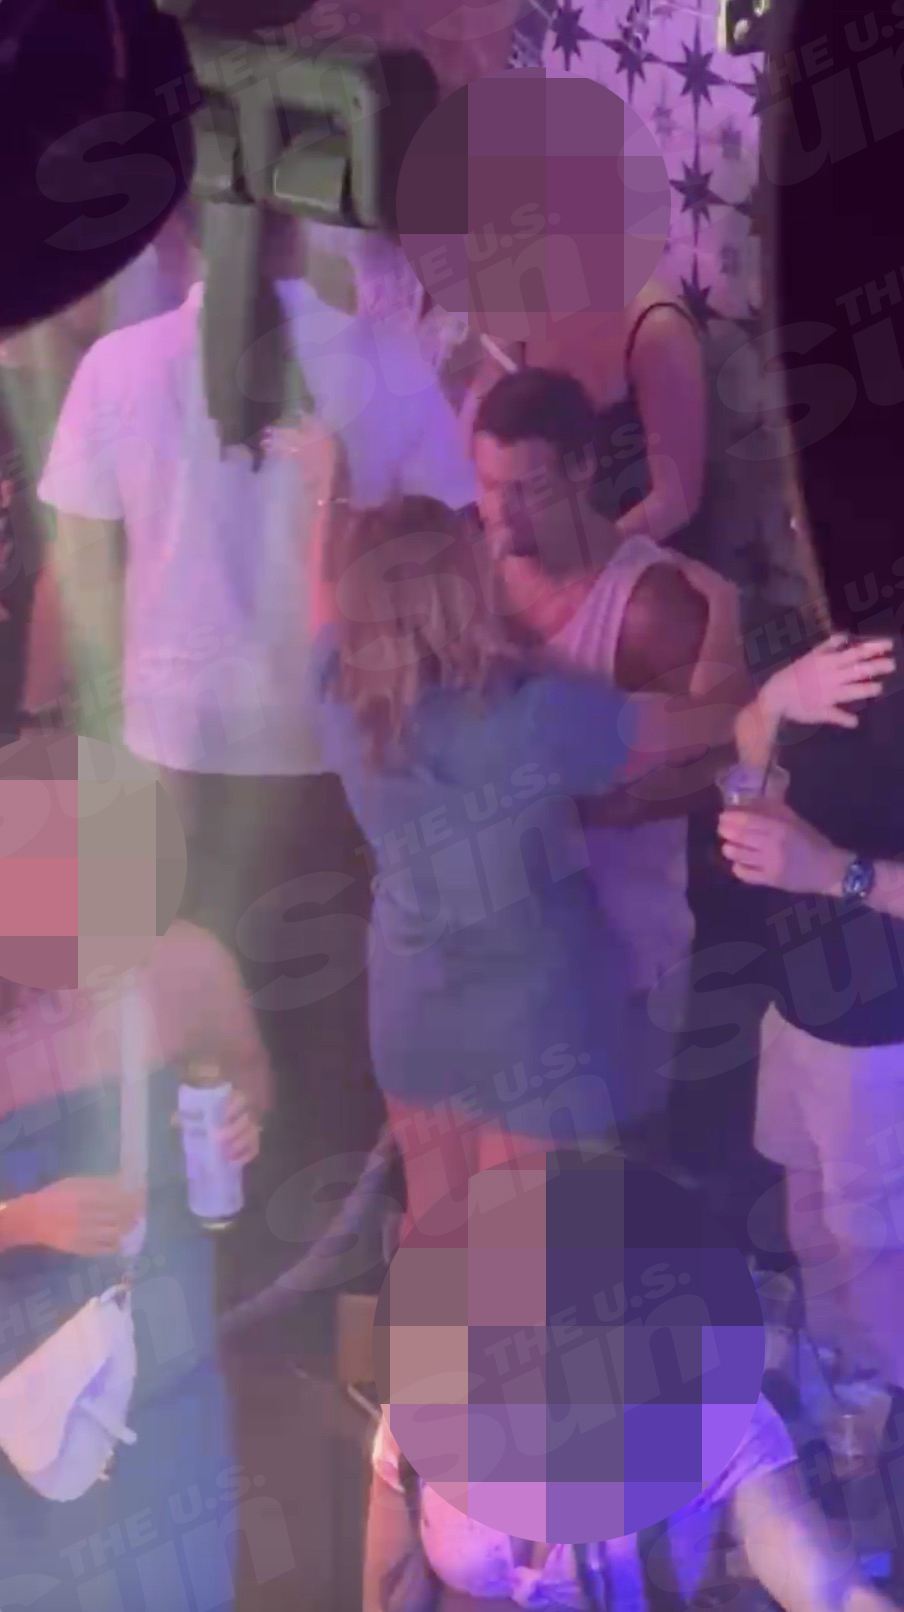 Miranda Lambert’s husband, Brendan McLoughlin, was caught dancing with a group of women at her bar